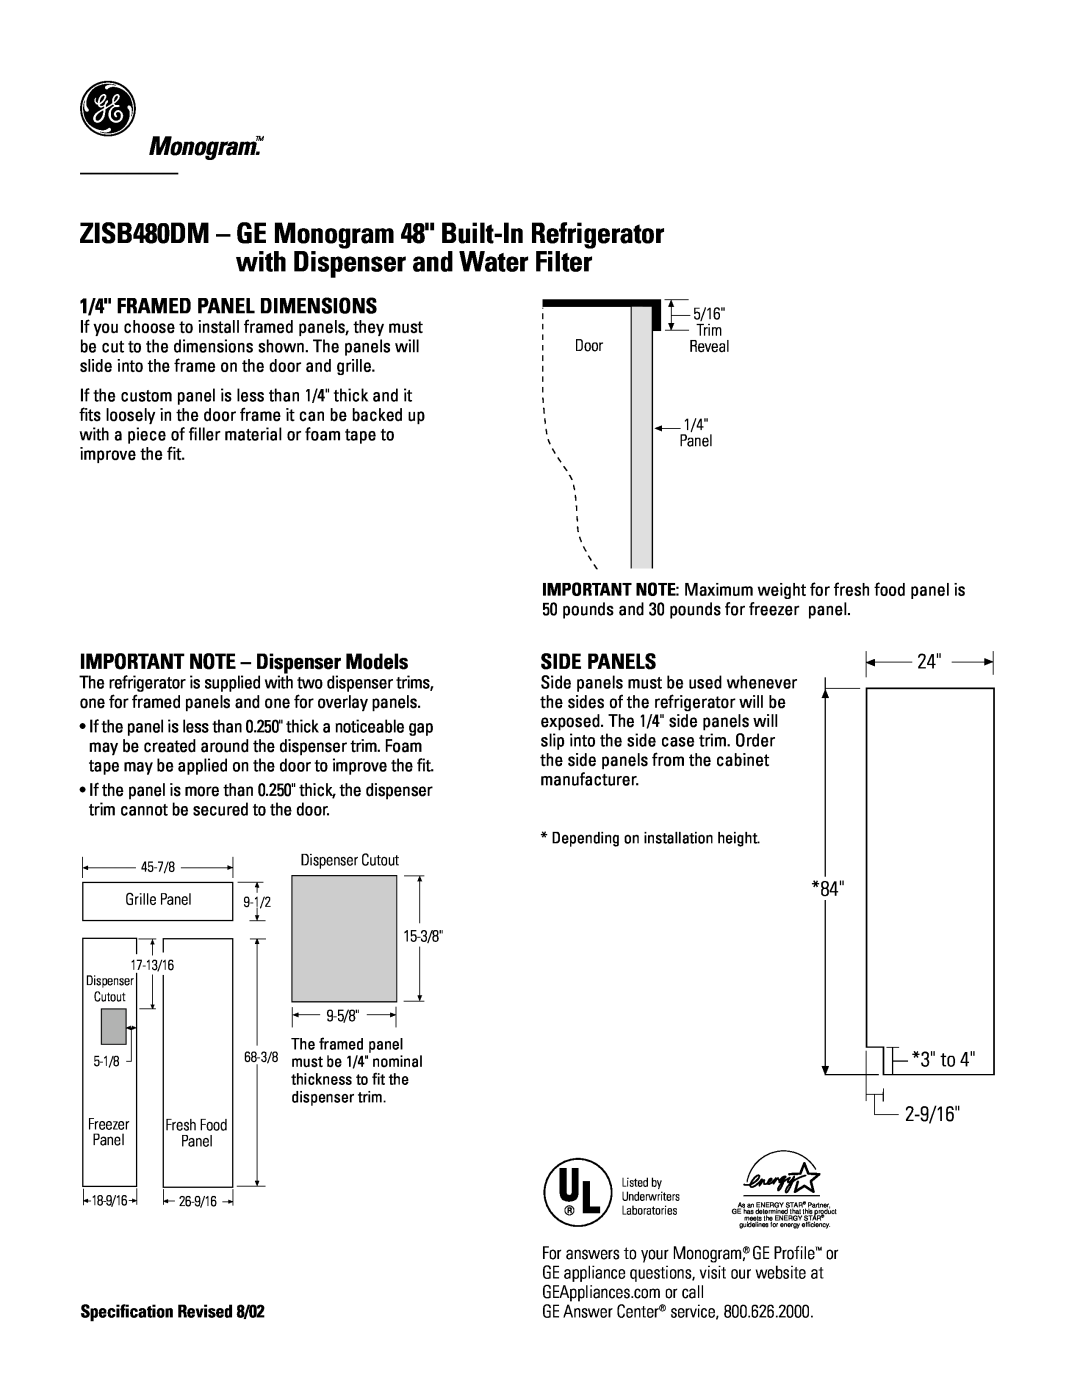 GE Monogram ZISB480DM Monogram, 1/4 FRAMED PANEL DIMENSIONS, IMPORTANT NOTE - Dispenser Models, Side Panels, 3 to 2-9/16 